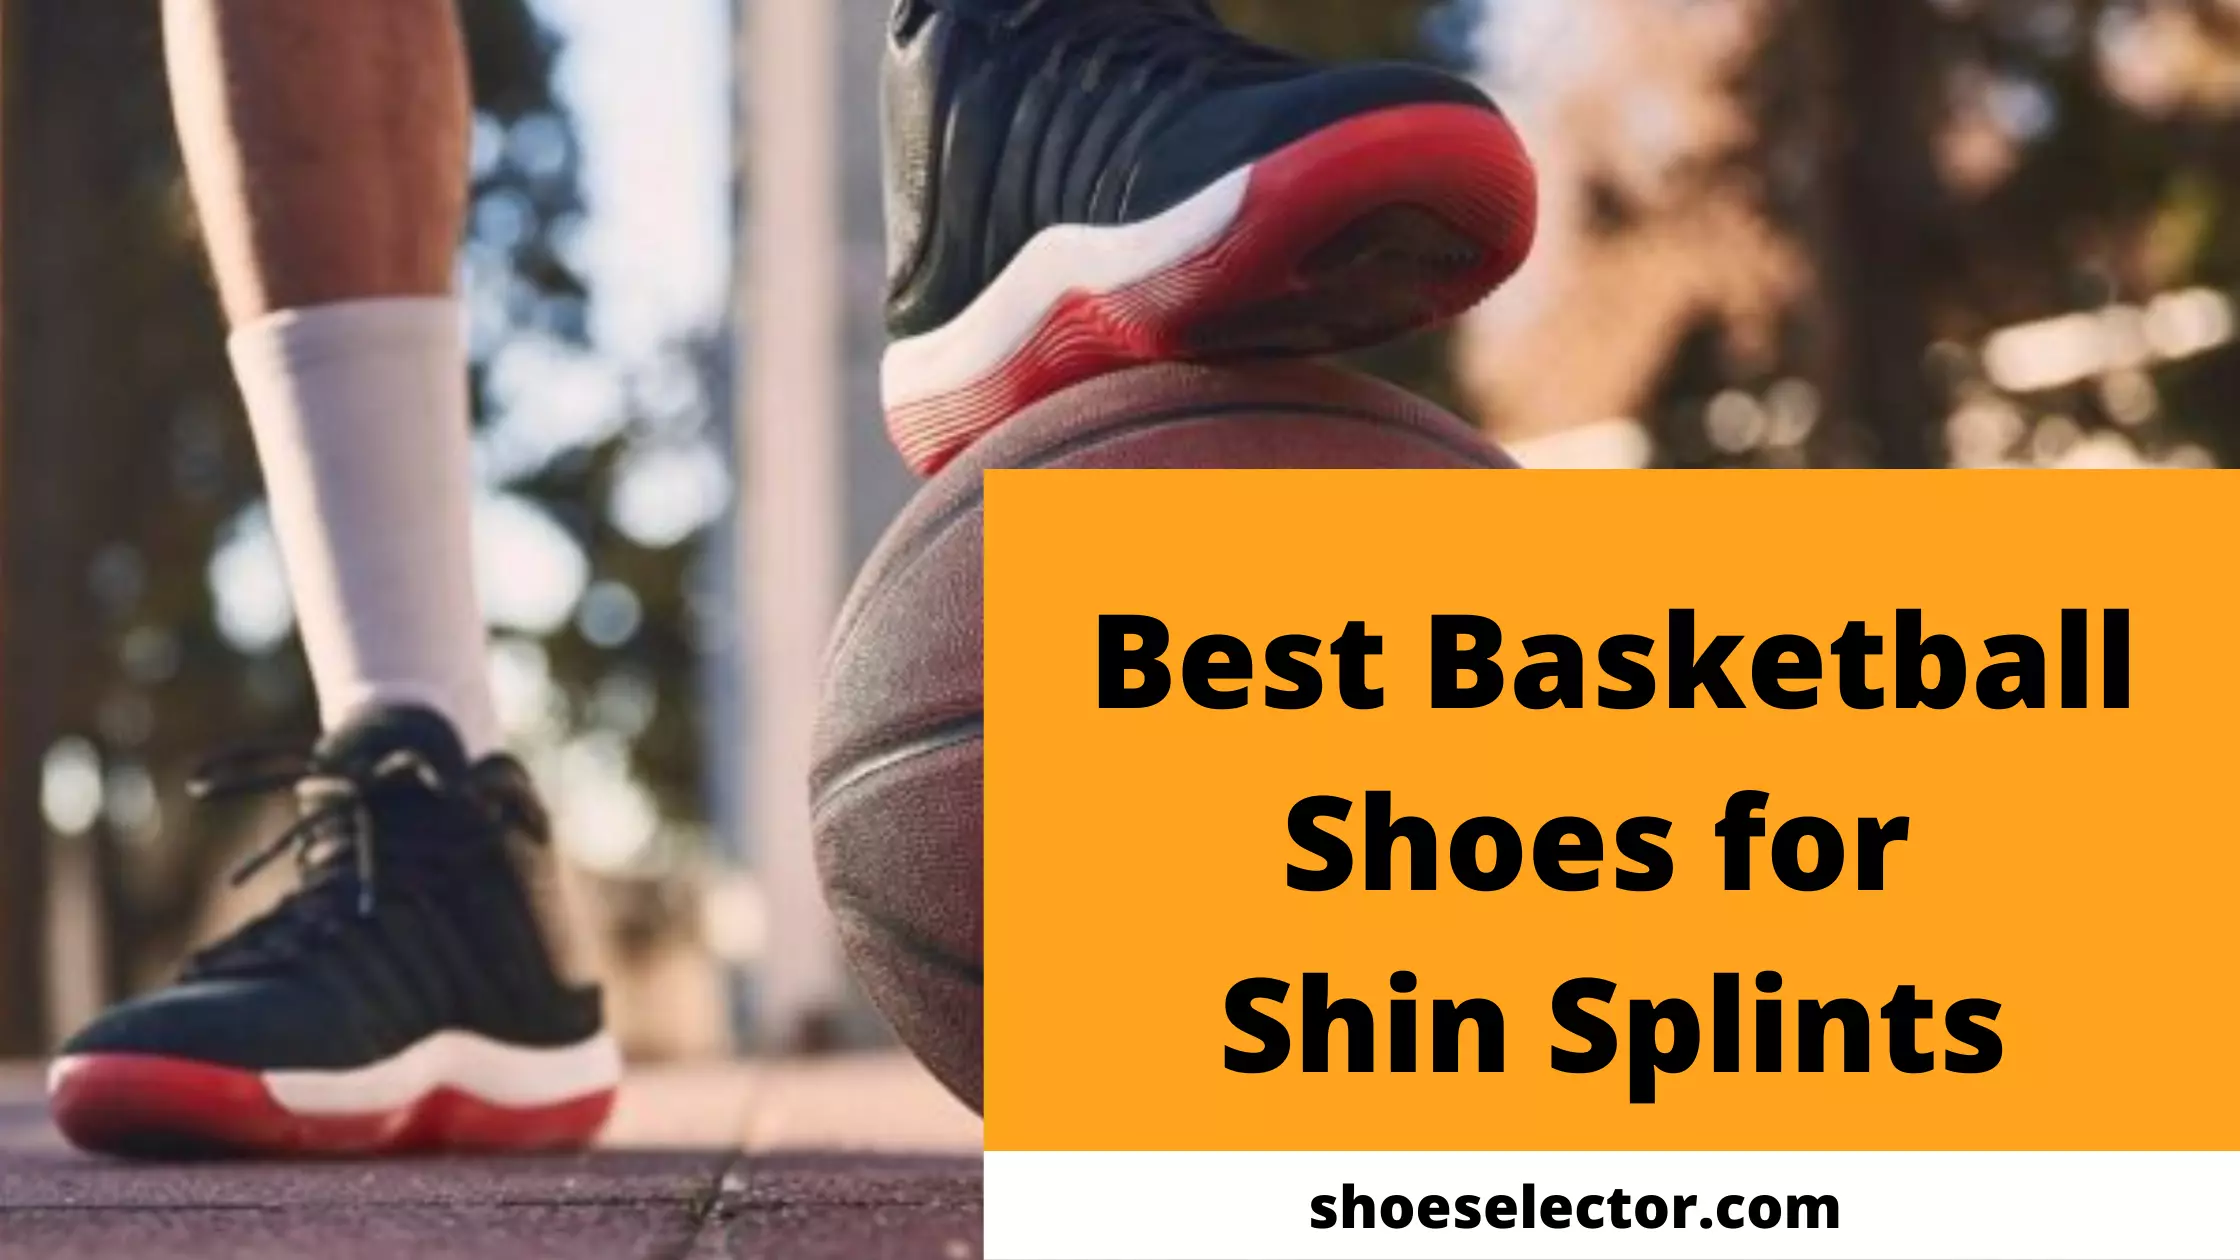 Top 10 Best Basketball Shoes for Shin Splints Reviews 2022 